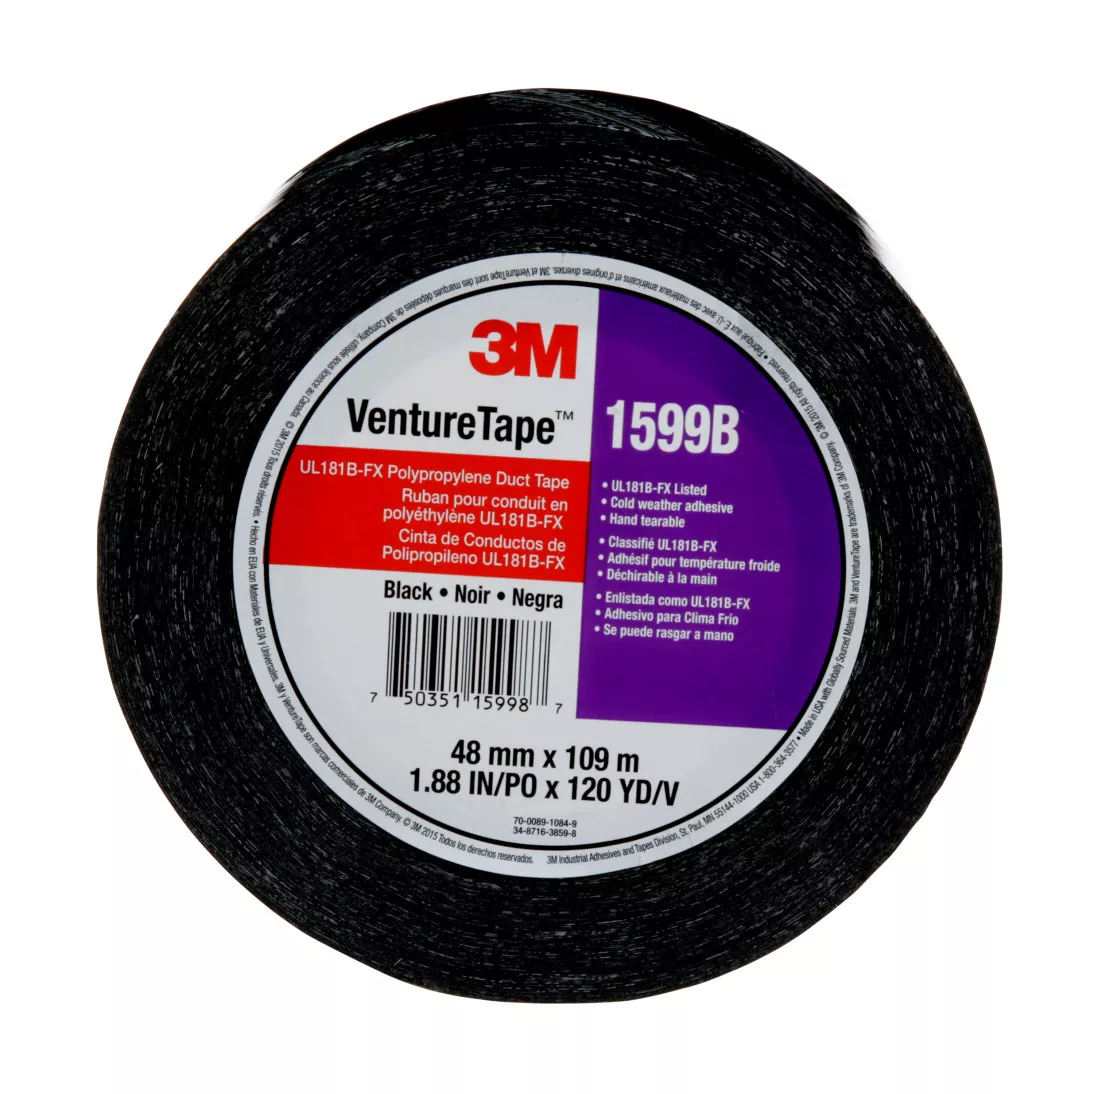 3M™ Venture Tape™ UL181B-FX Polypropylene Duct Tape 1599B, Black, 48 mm
x 109.7 m, 3 mil, 24 rolls per case